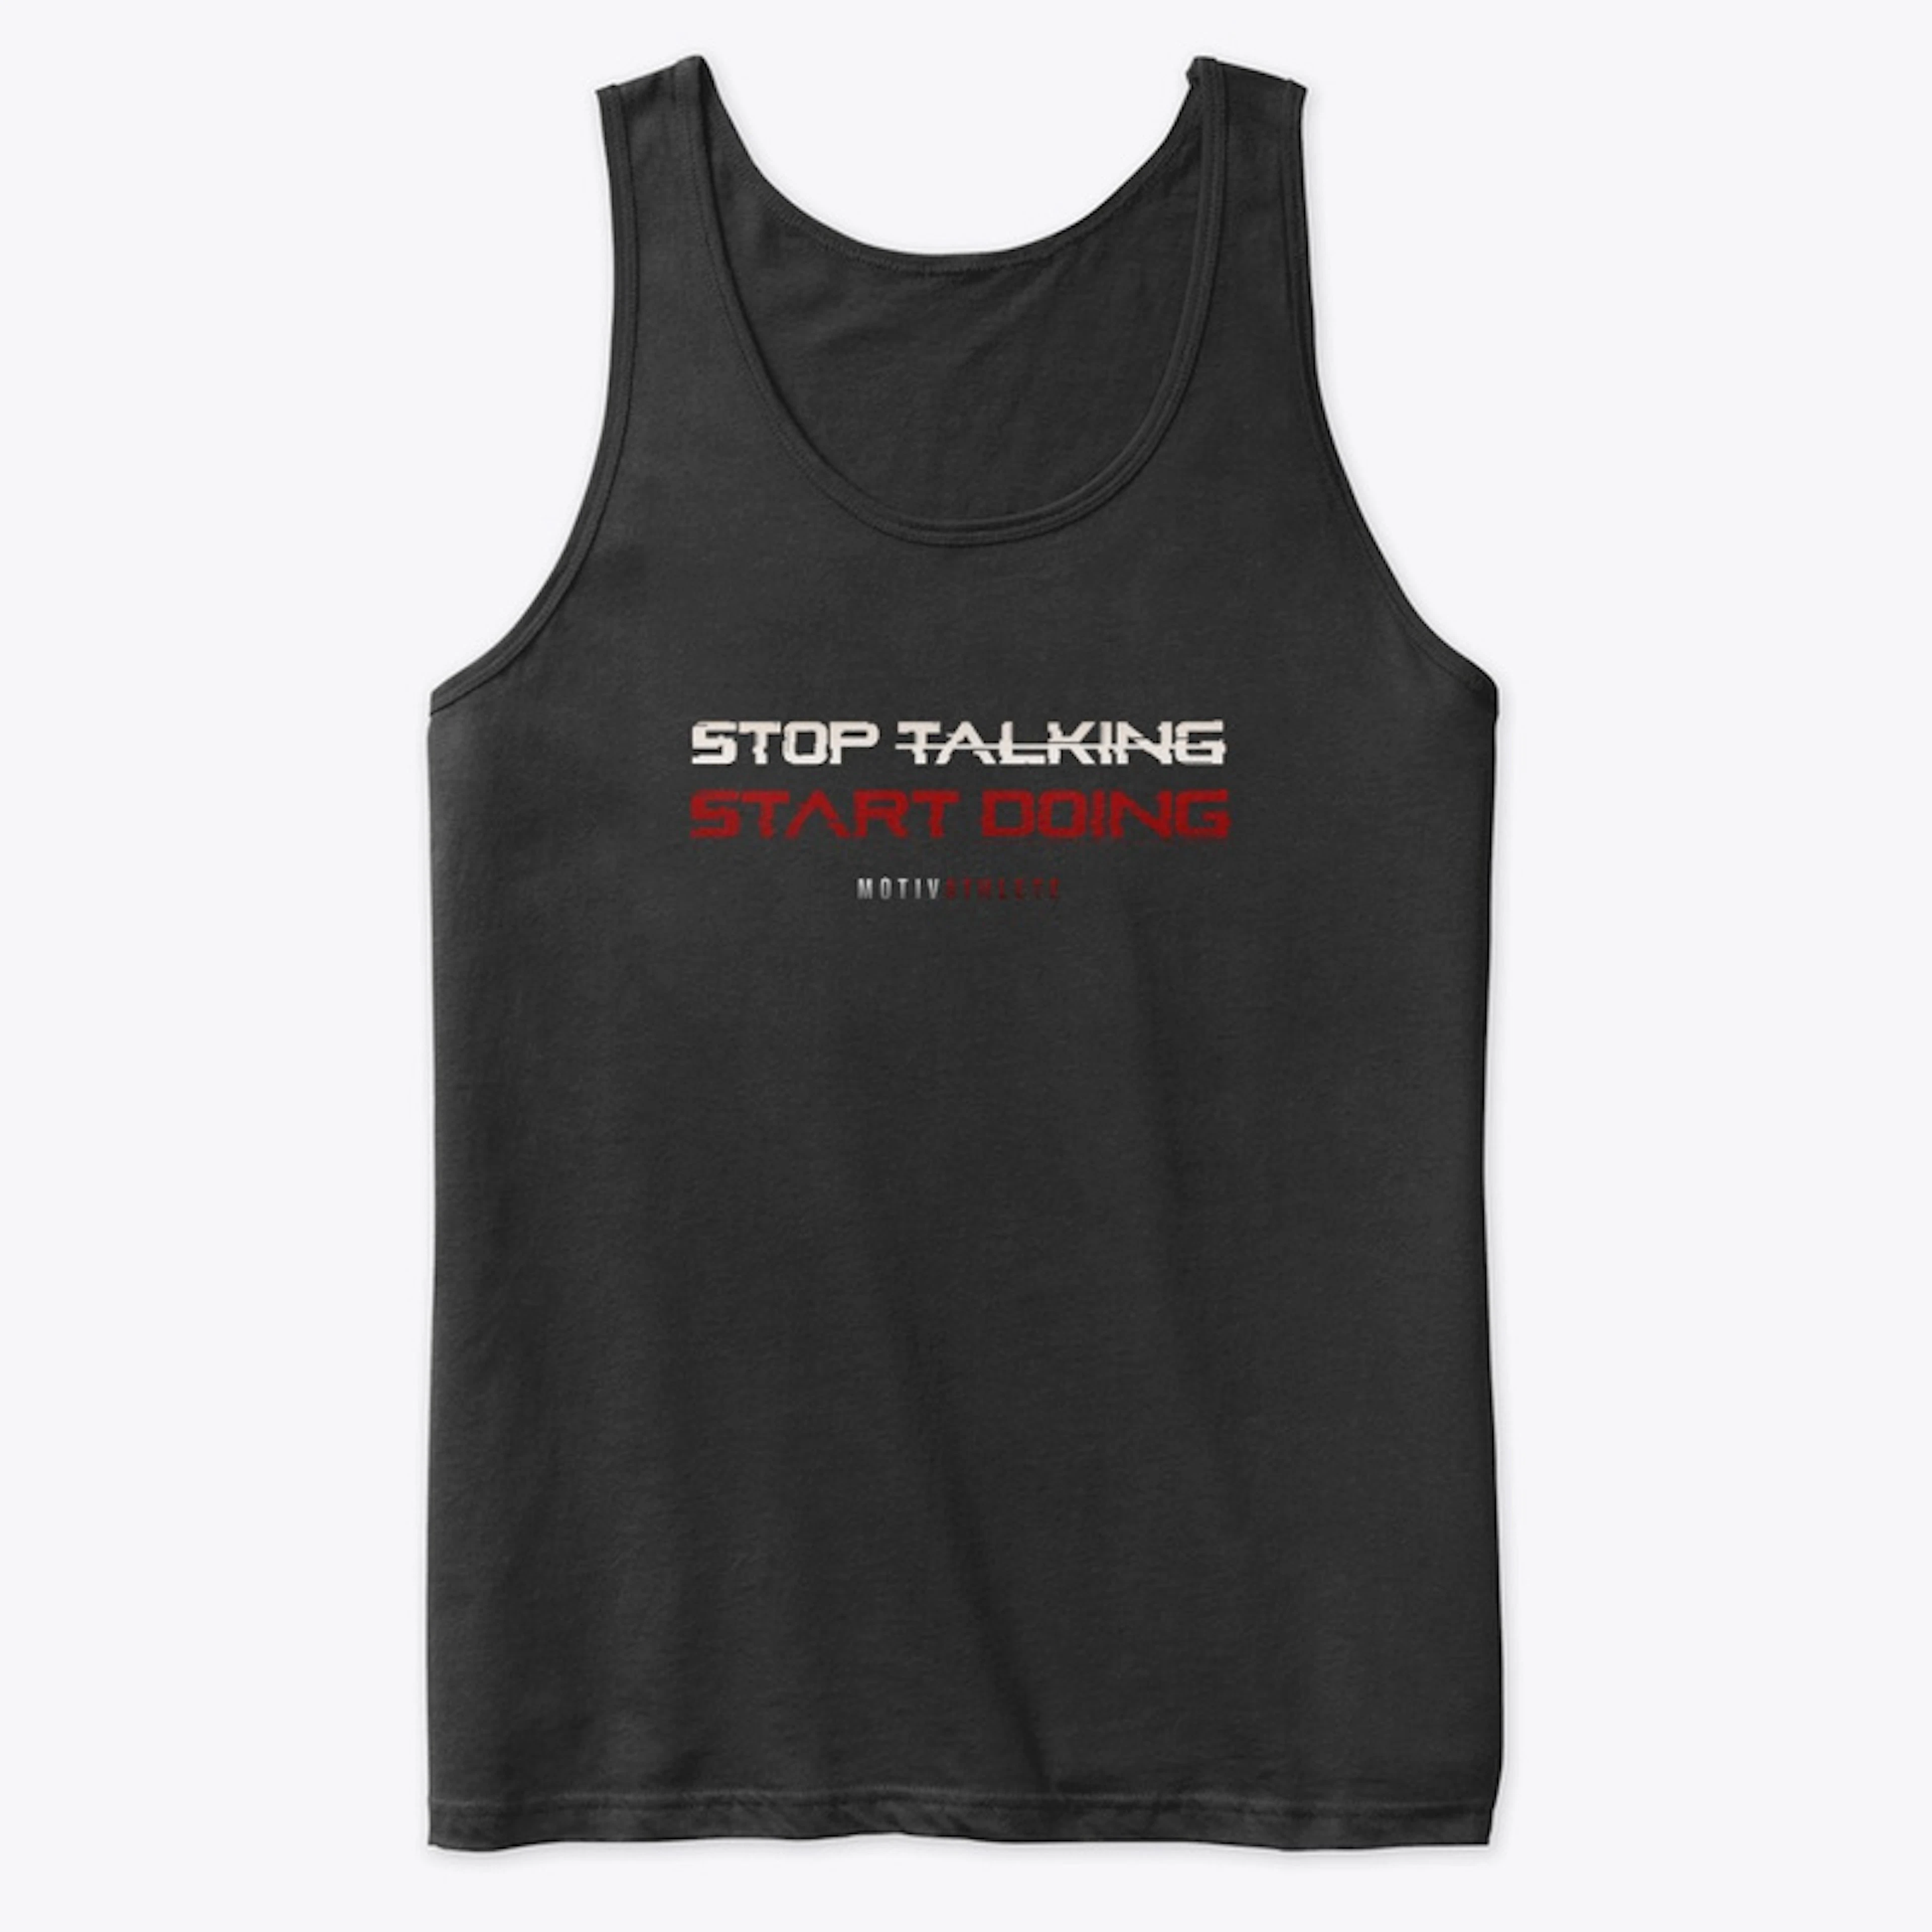 Stop Talking, Start Doing.